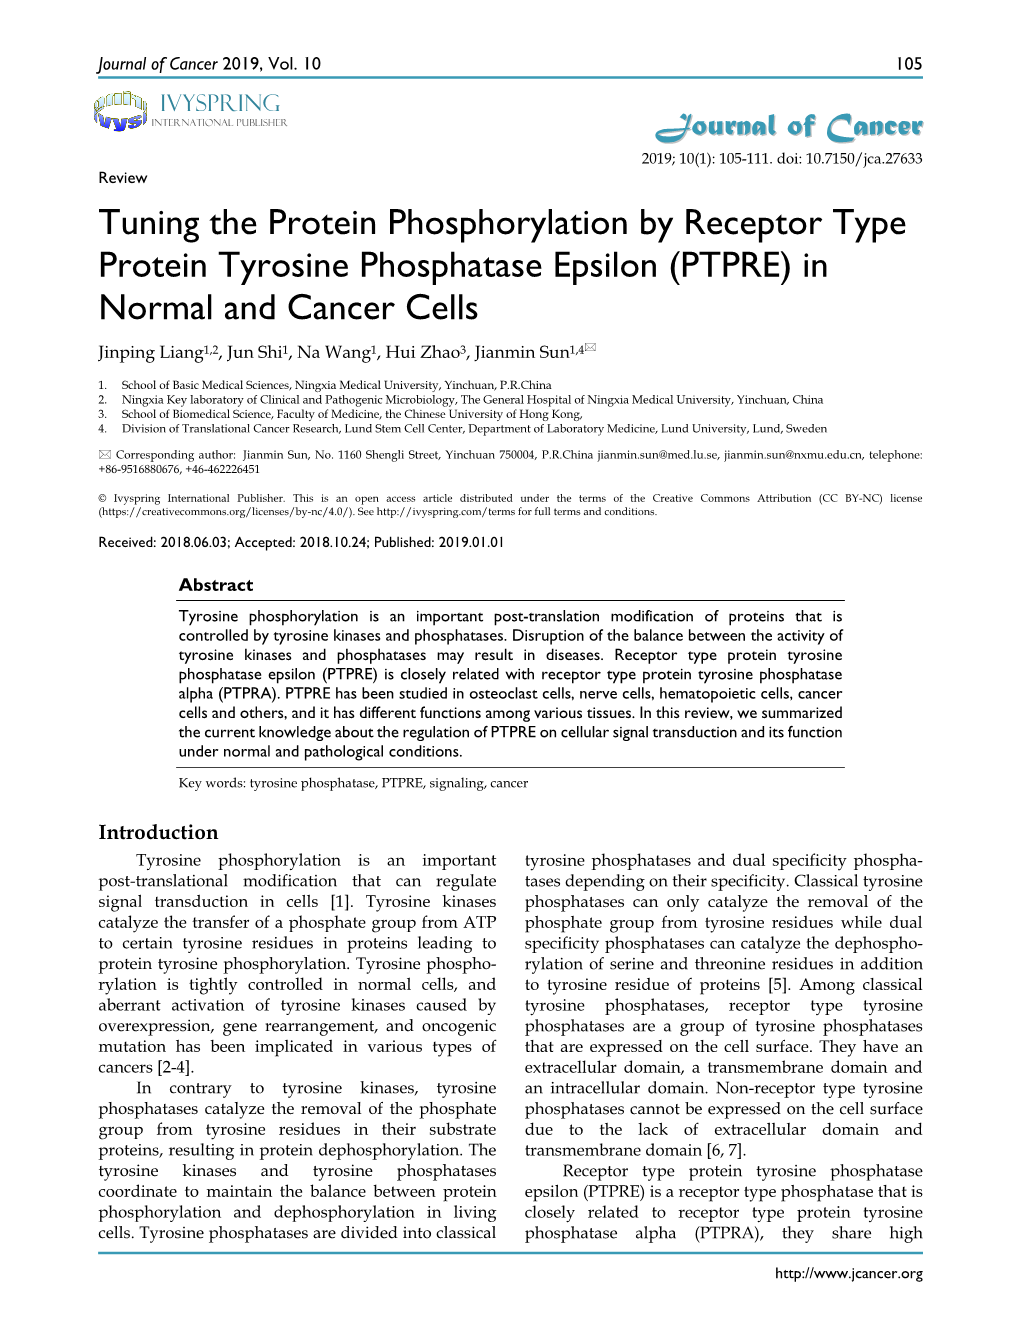 Tuning the Protein Phosphorylation by Receptor Type Protein Tyrosine